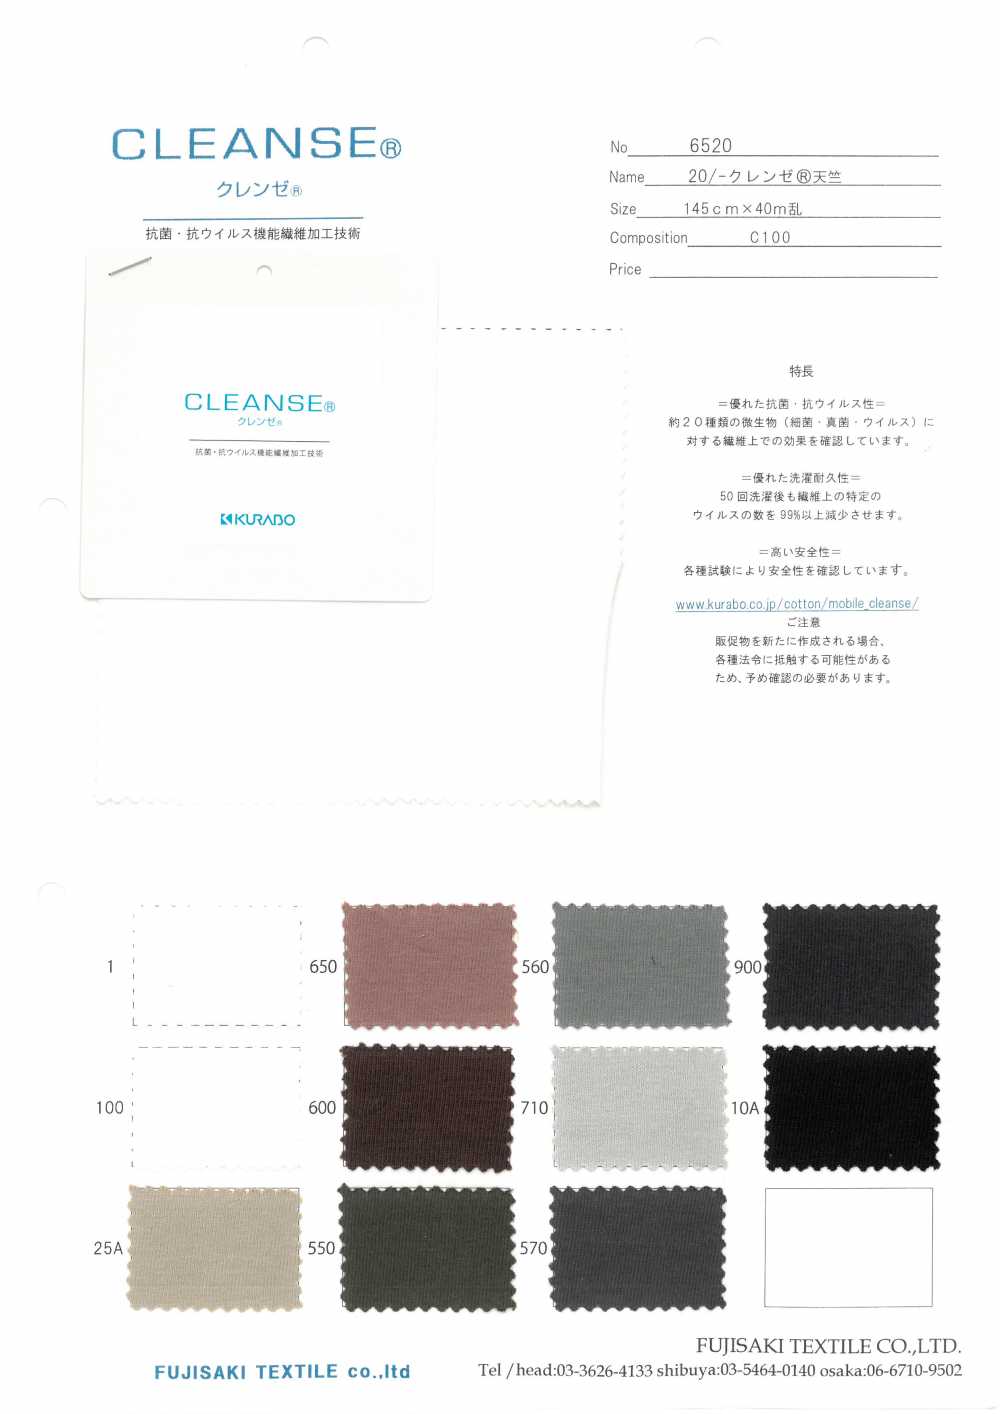 6520 20 / CLEANSE Algodão Tianzhu[Têxtil / Tecido] Fujisaki Textile